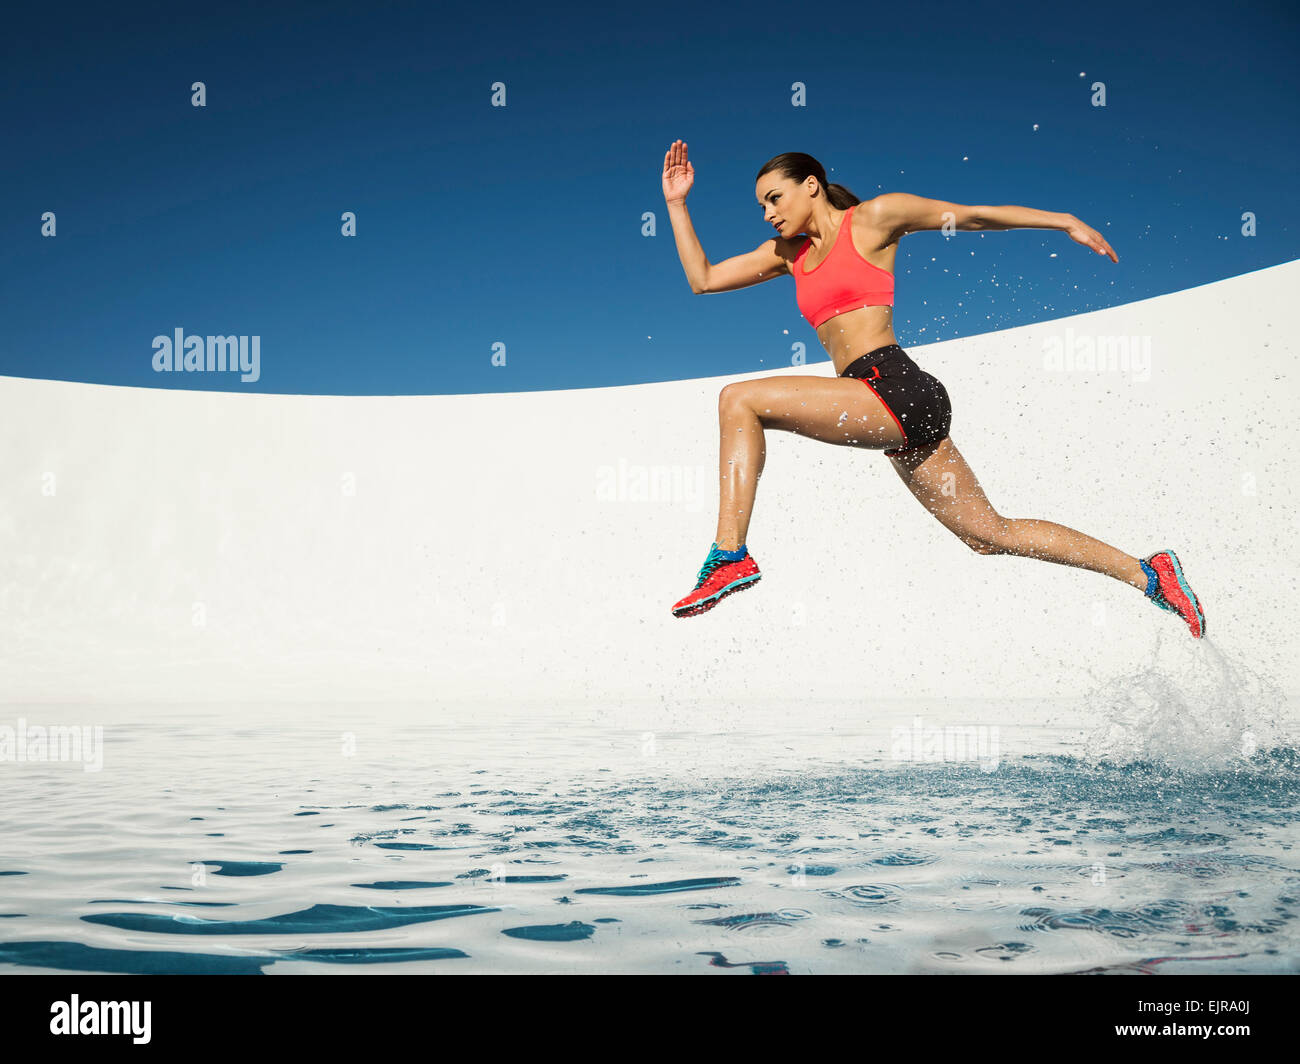 Caucasian woman running on water surface Stock Photo